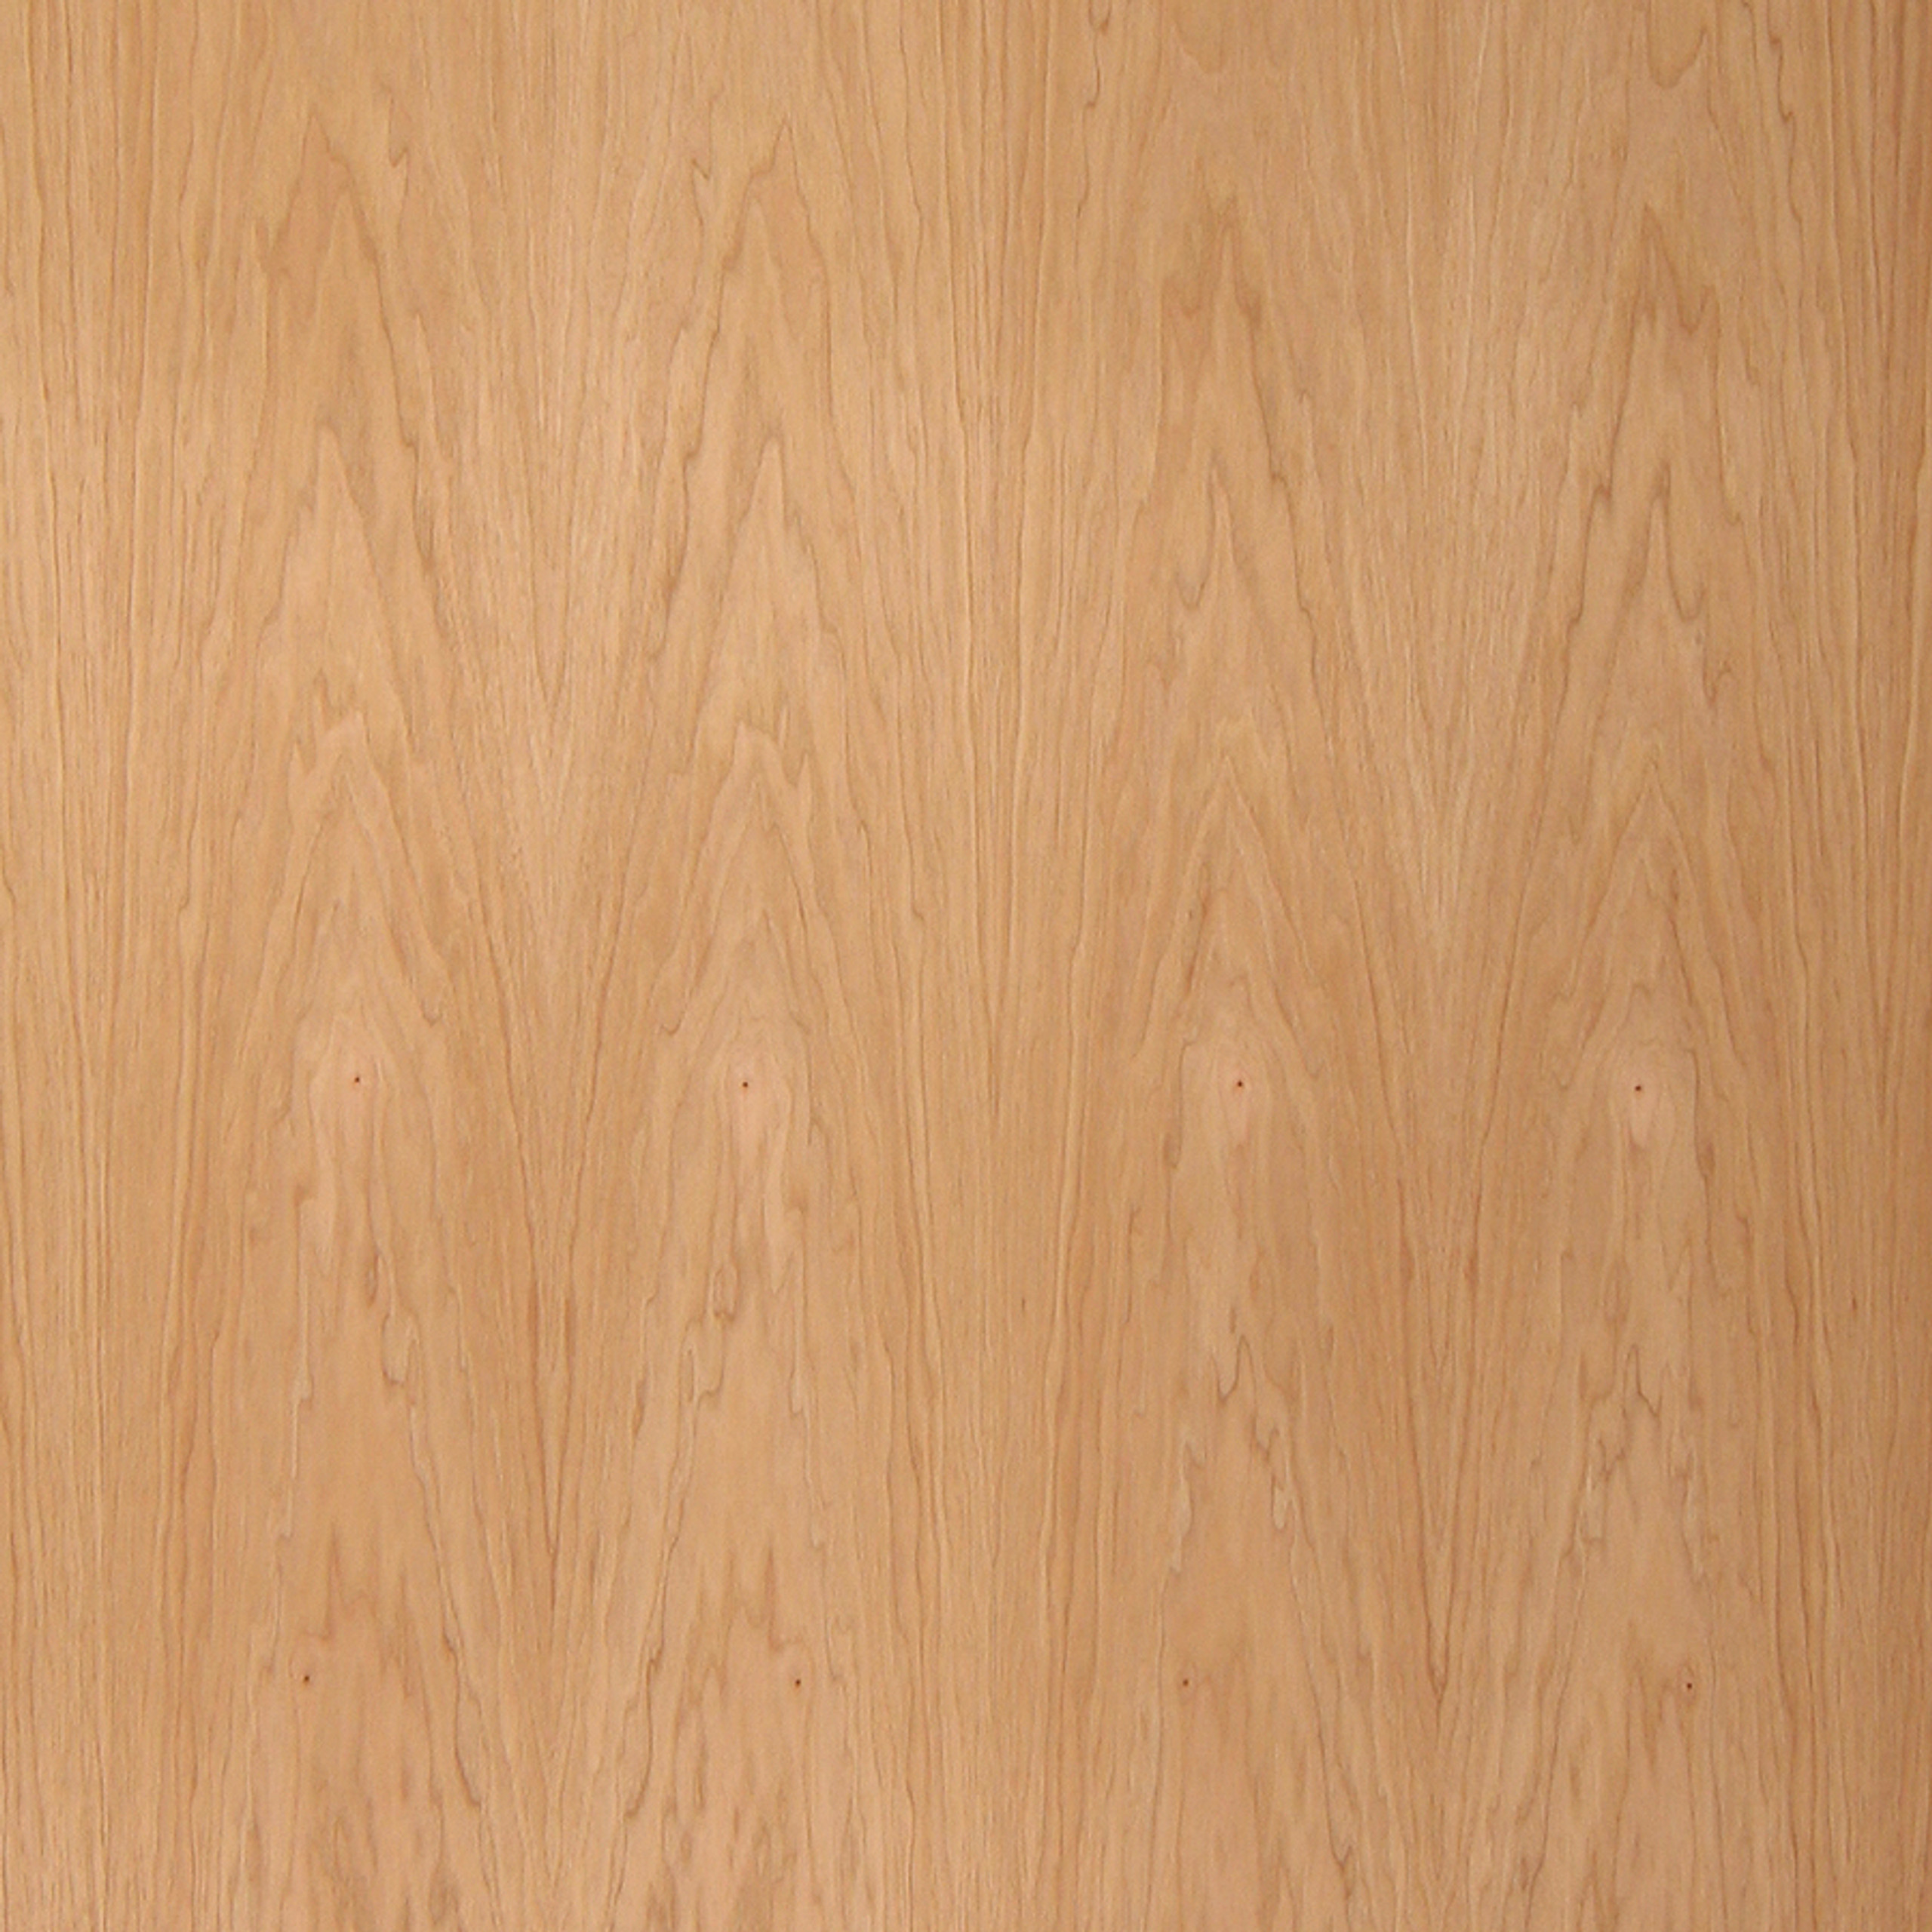 Hickory Veneer: Uniform Color Flat Cut Hickory Wood Veneers Sheets ...